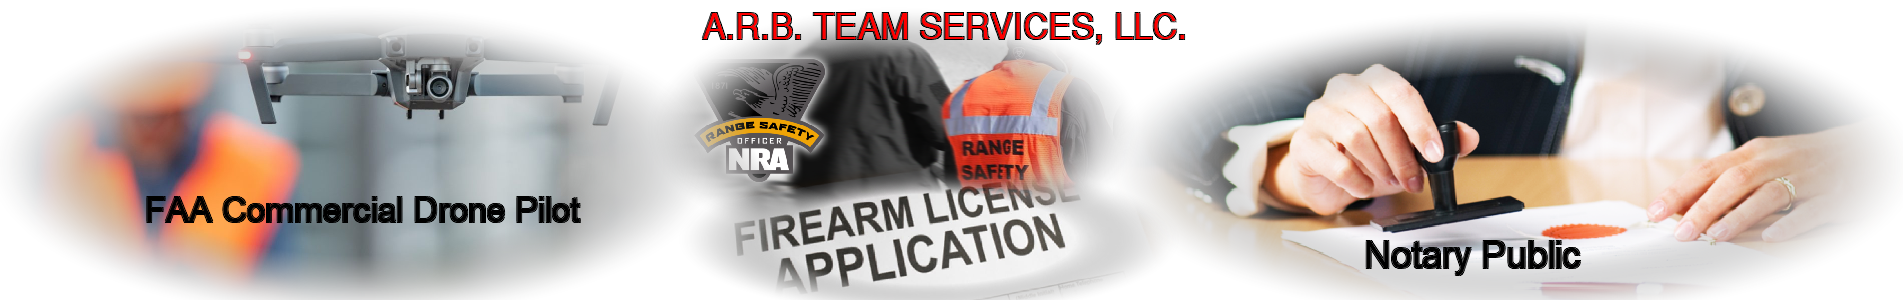 ARB Team Services LLC Header Banner